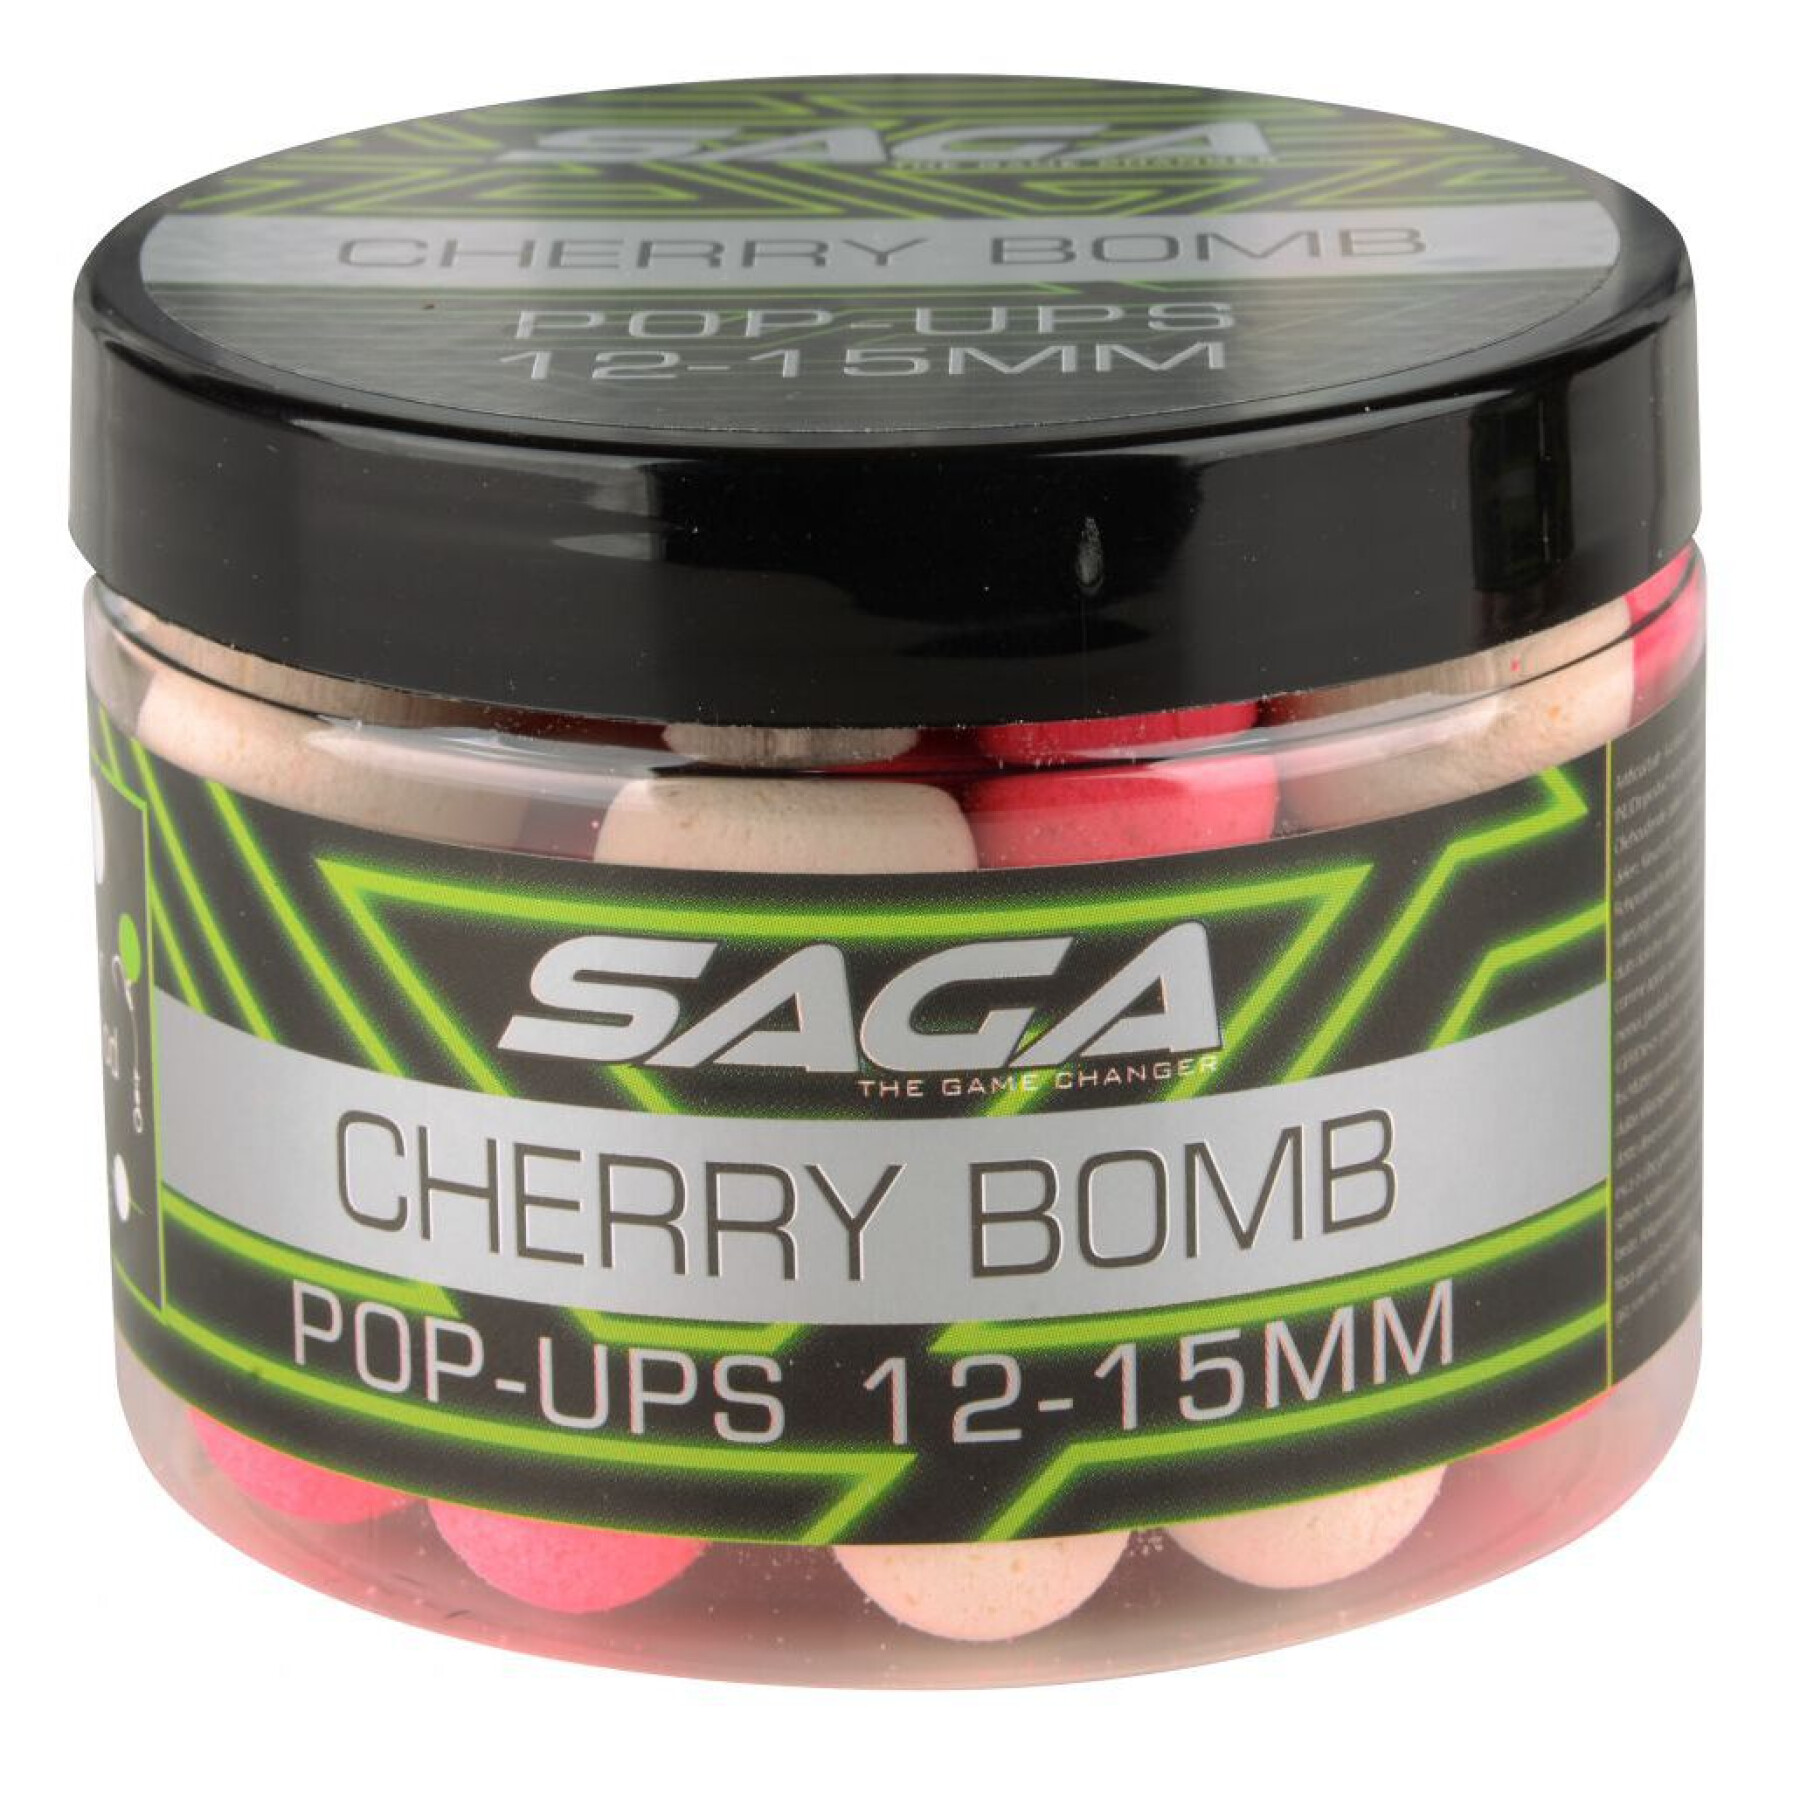 Pop-up Saga Cherry Bomb 50g